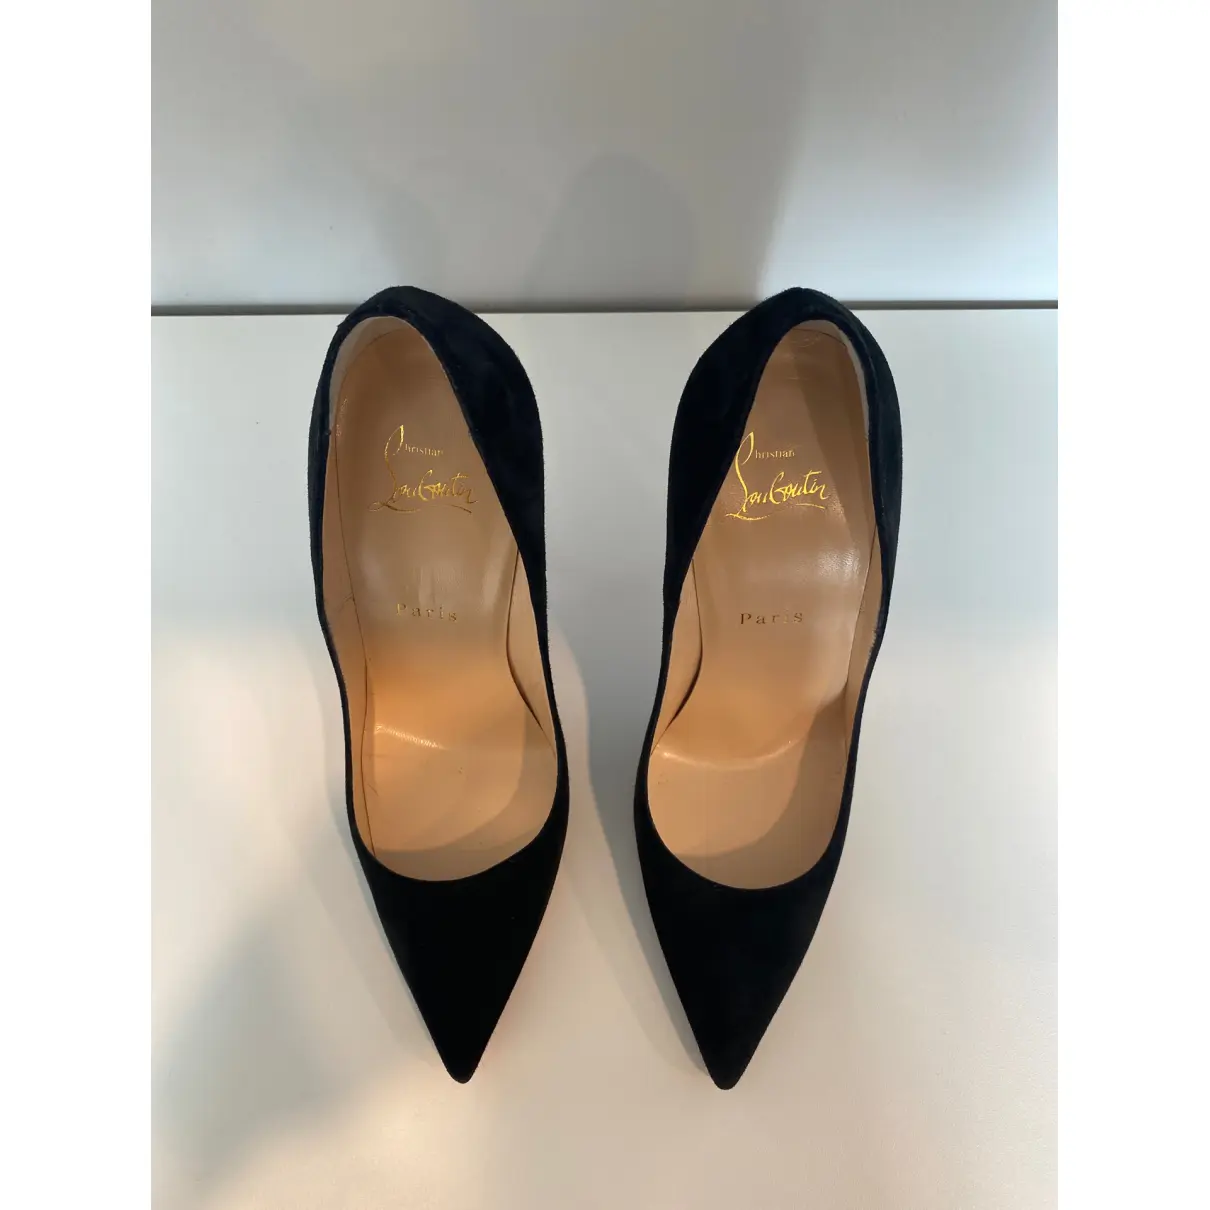 Buy Christian Louboutin So Kate heels online